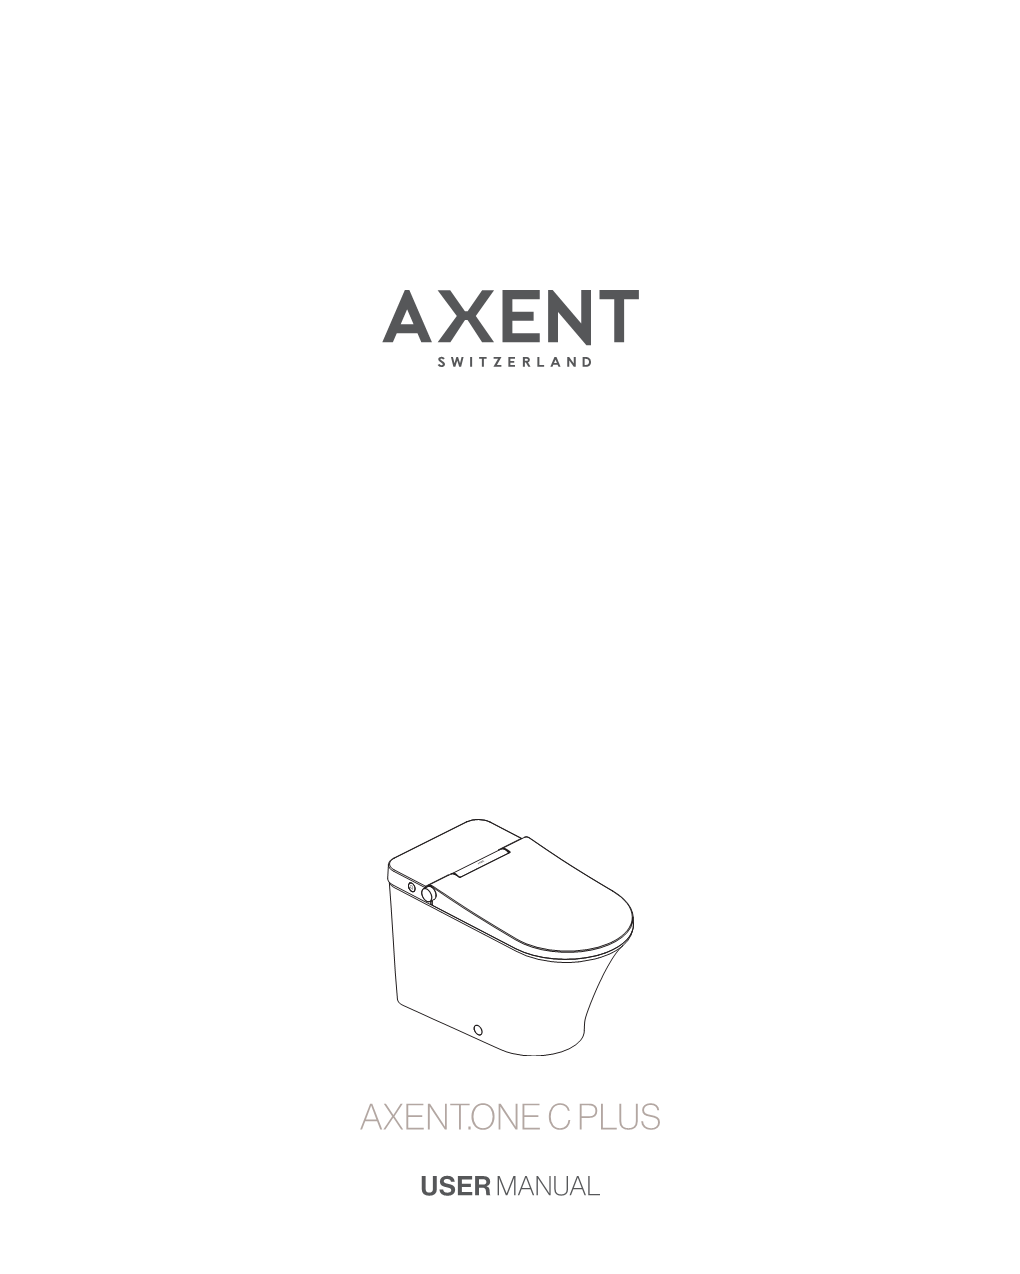 Axent.One C Plus